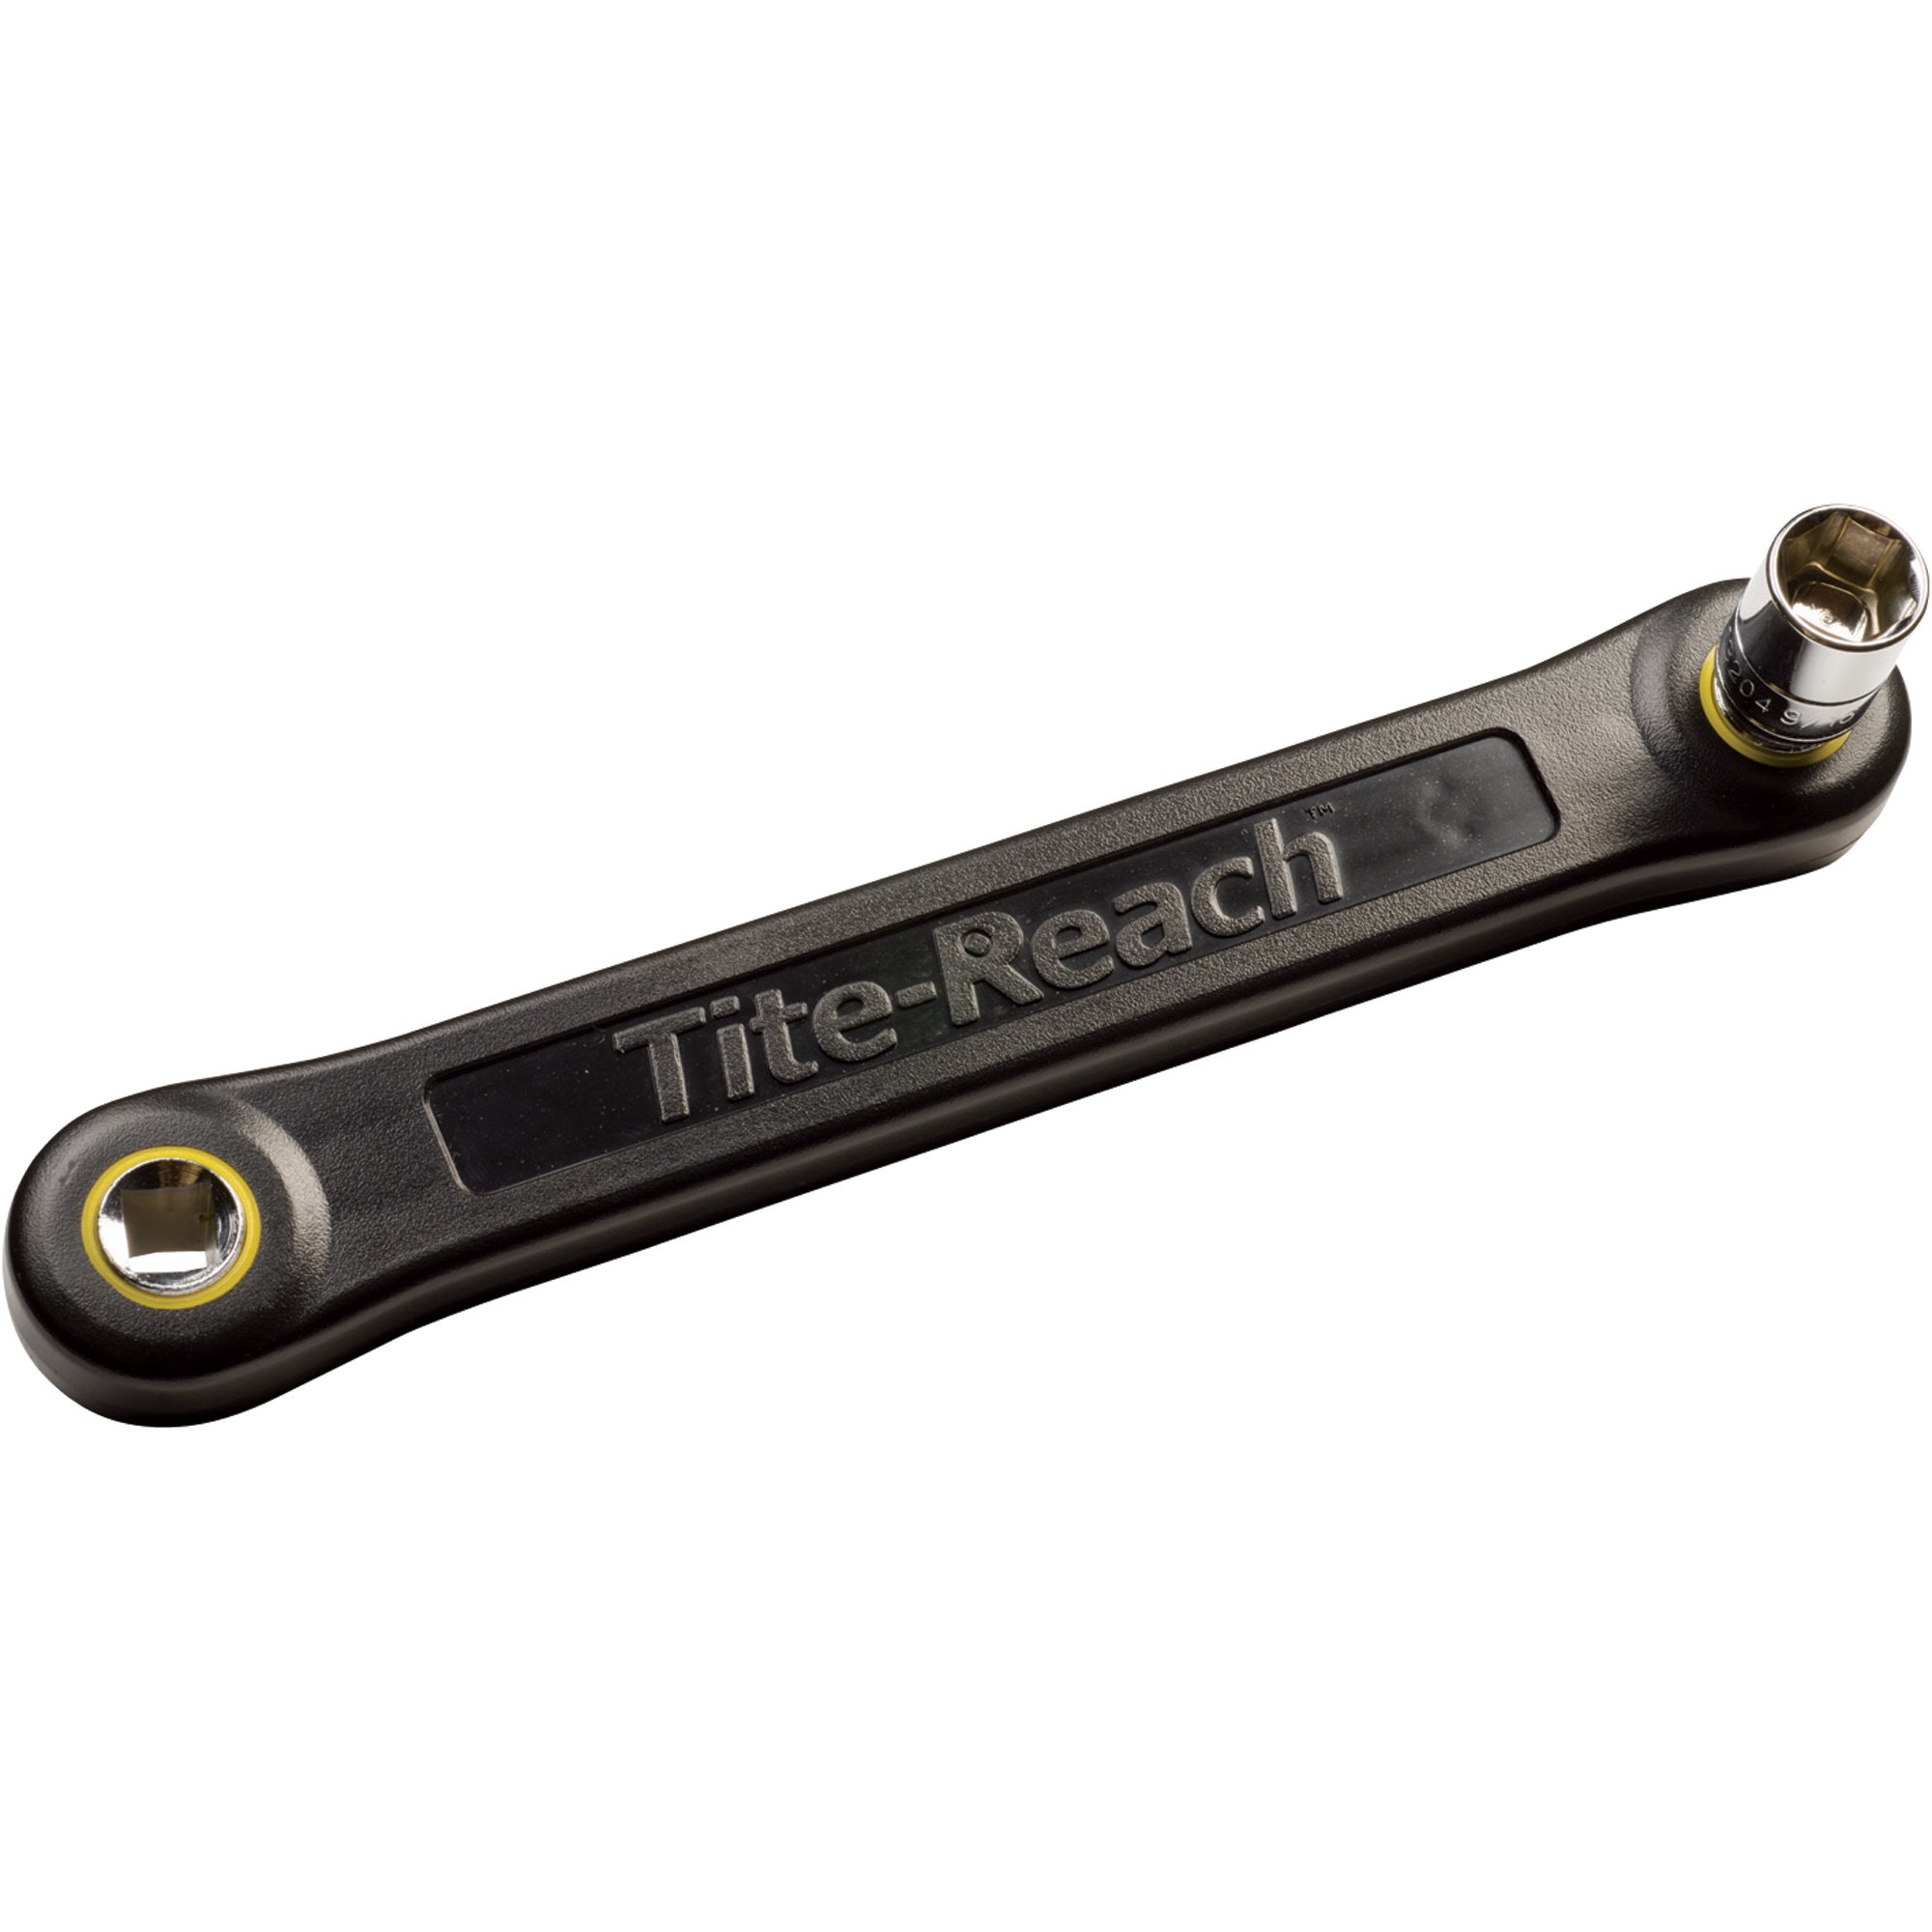 TR Tools LLC TR14V1 Tite-Reach Extension Wrench 1/4